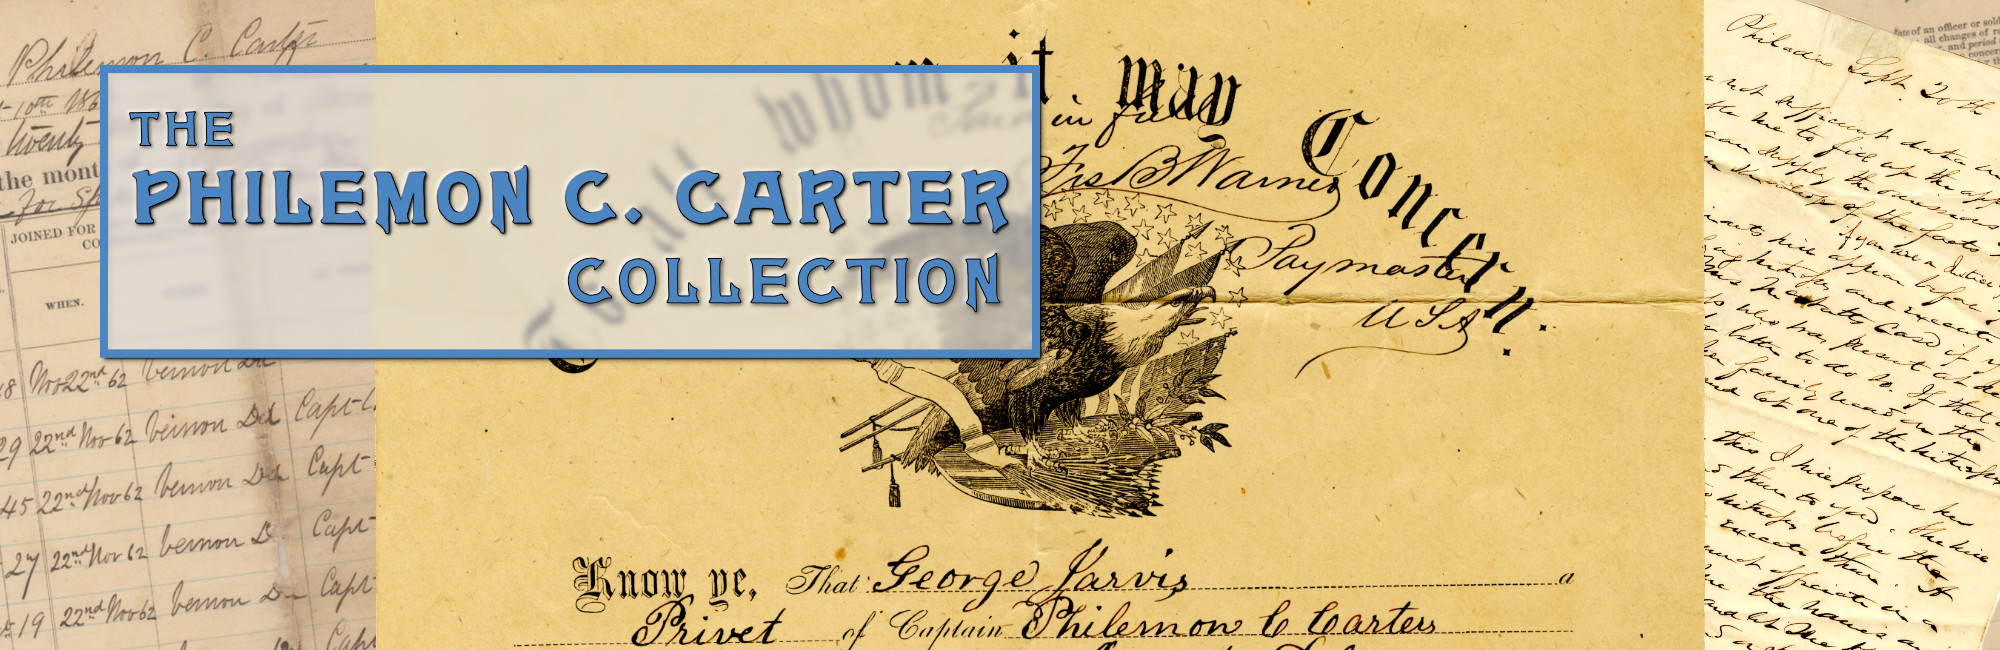 Philemon C Carter Collection Header